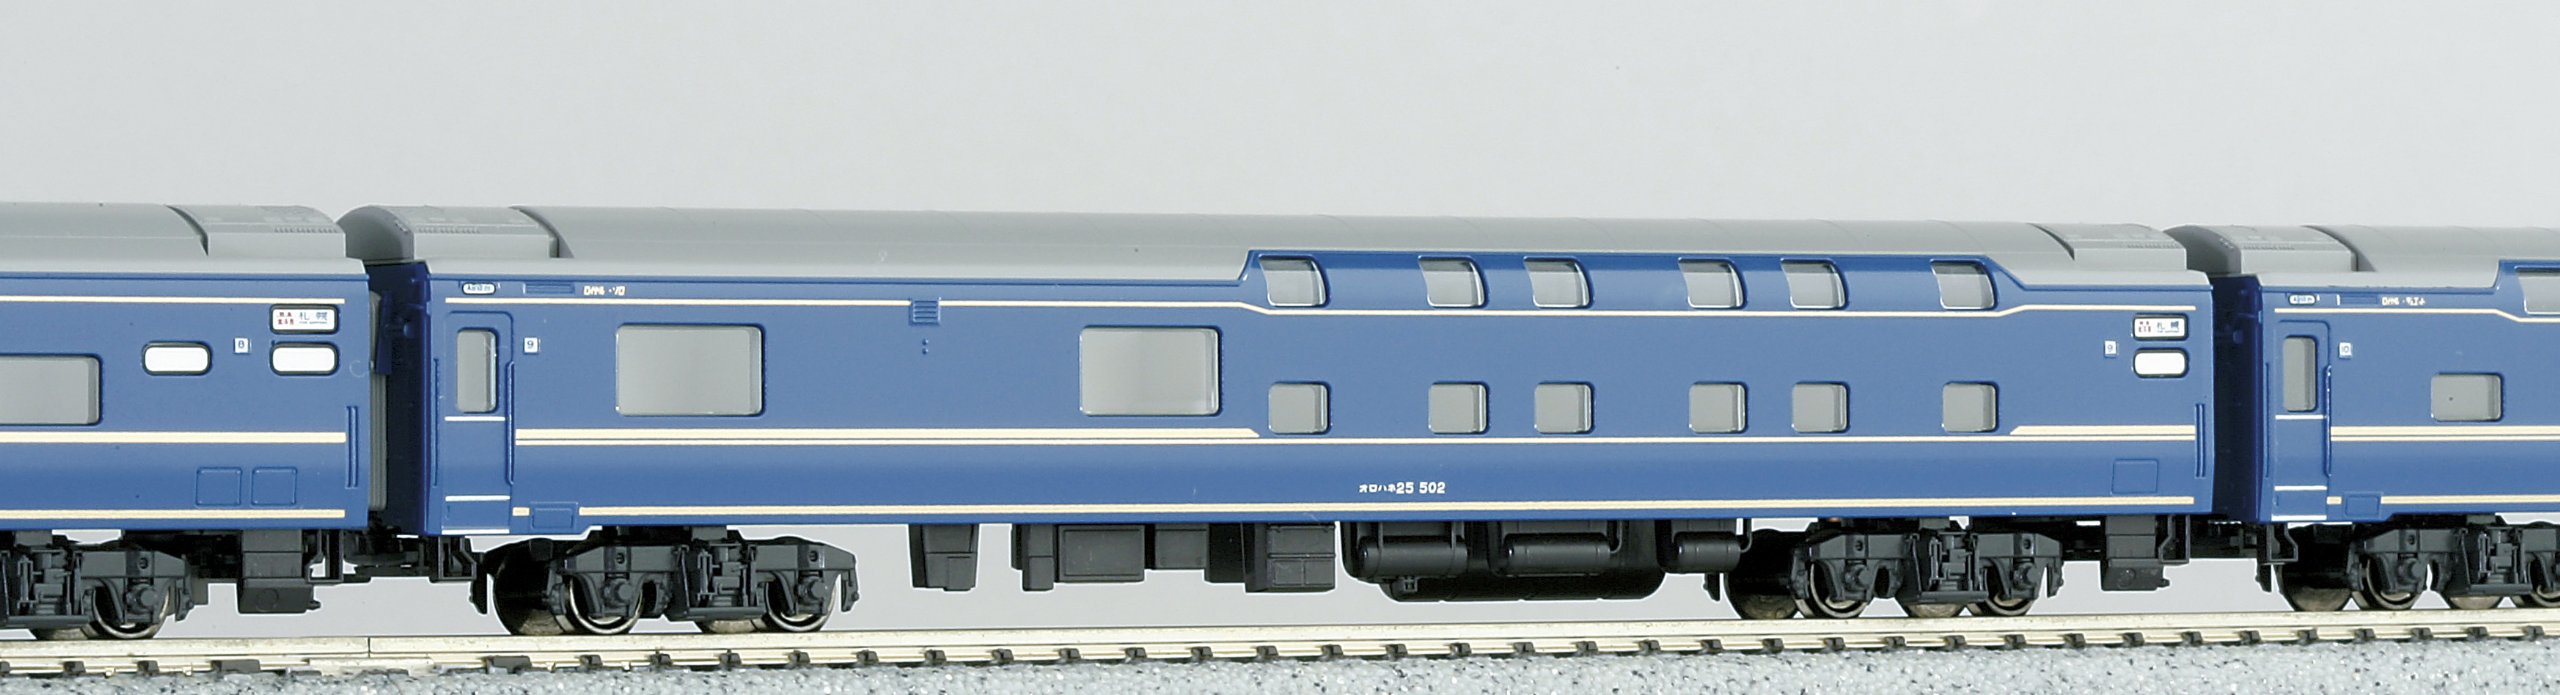 Kato Spur N 24 Serie Basisset mit 6 Wagen – Express Sleeper Hokutosei Dx 10-831 Eisenbahnmodell